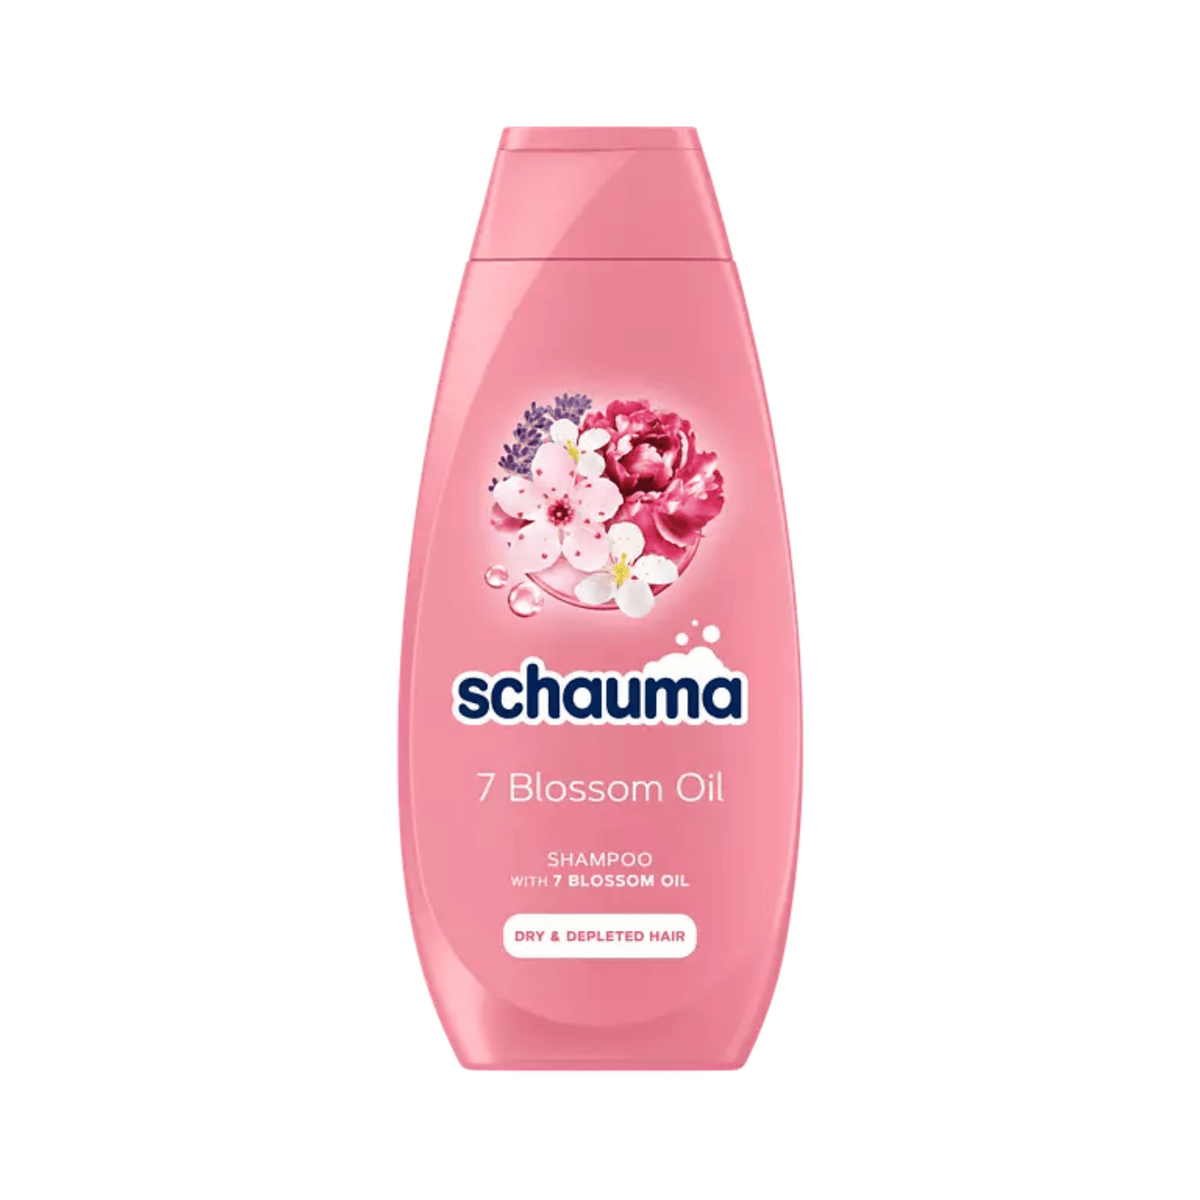 Primary Image of 7 Blossom Oil Shampoo